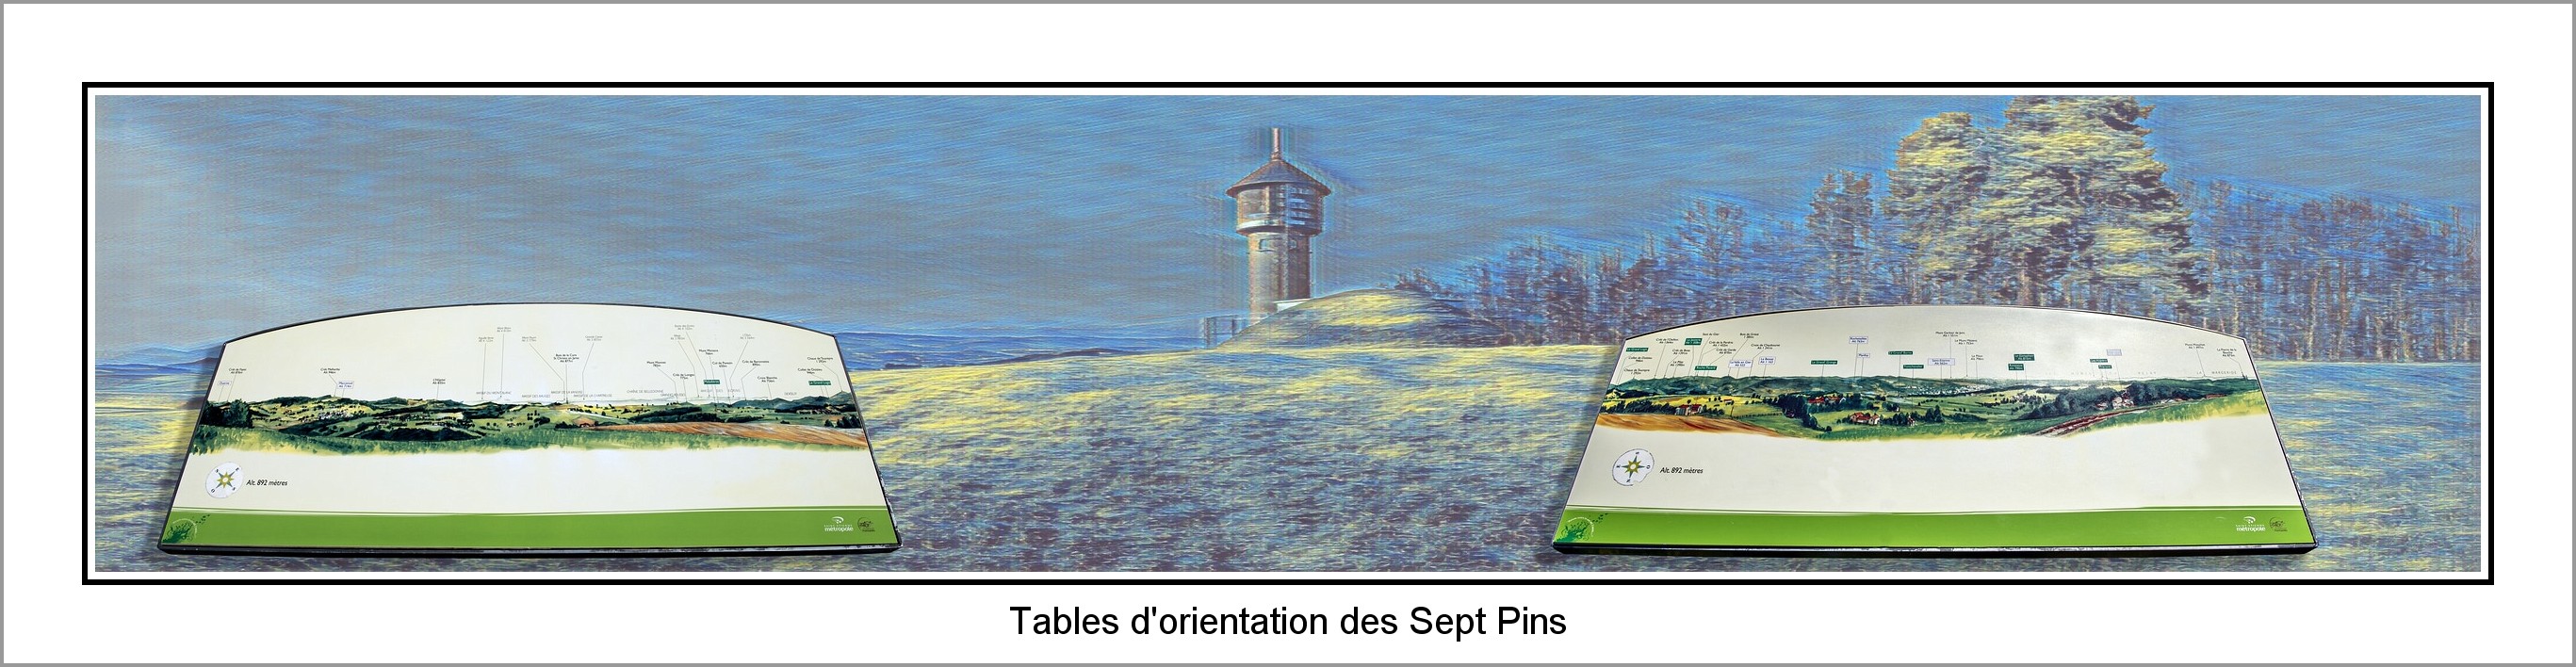 Table d_orientation des sept pins-nano-BorderMaker.jpg